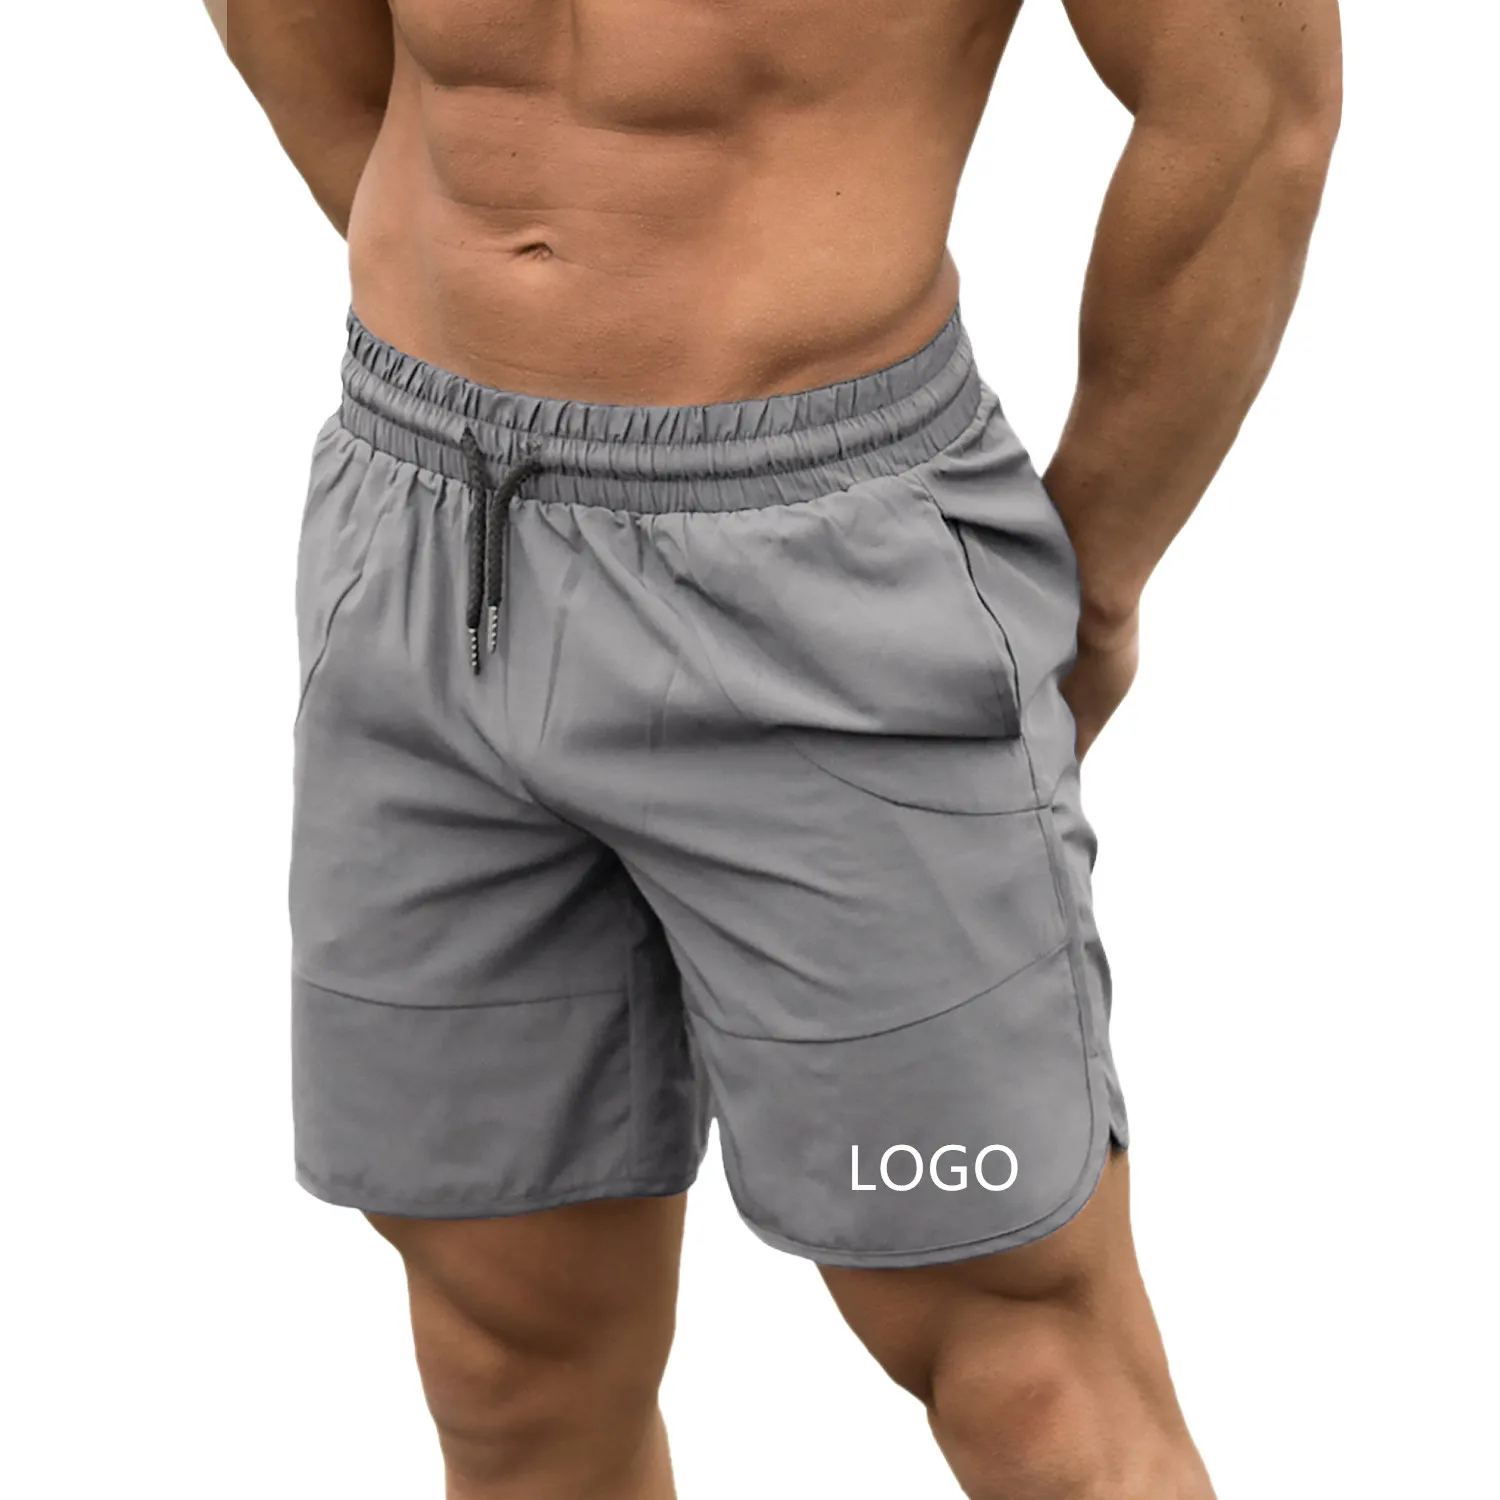 
Wholesale Custom 7' Inch Nylon Gym Fitness Shorts Blank Workout Bodybuilding Mens Shorts 